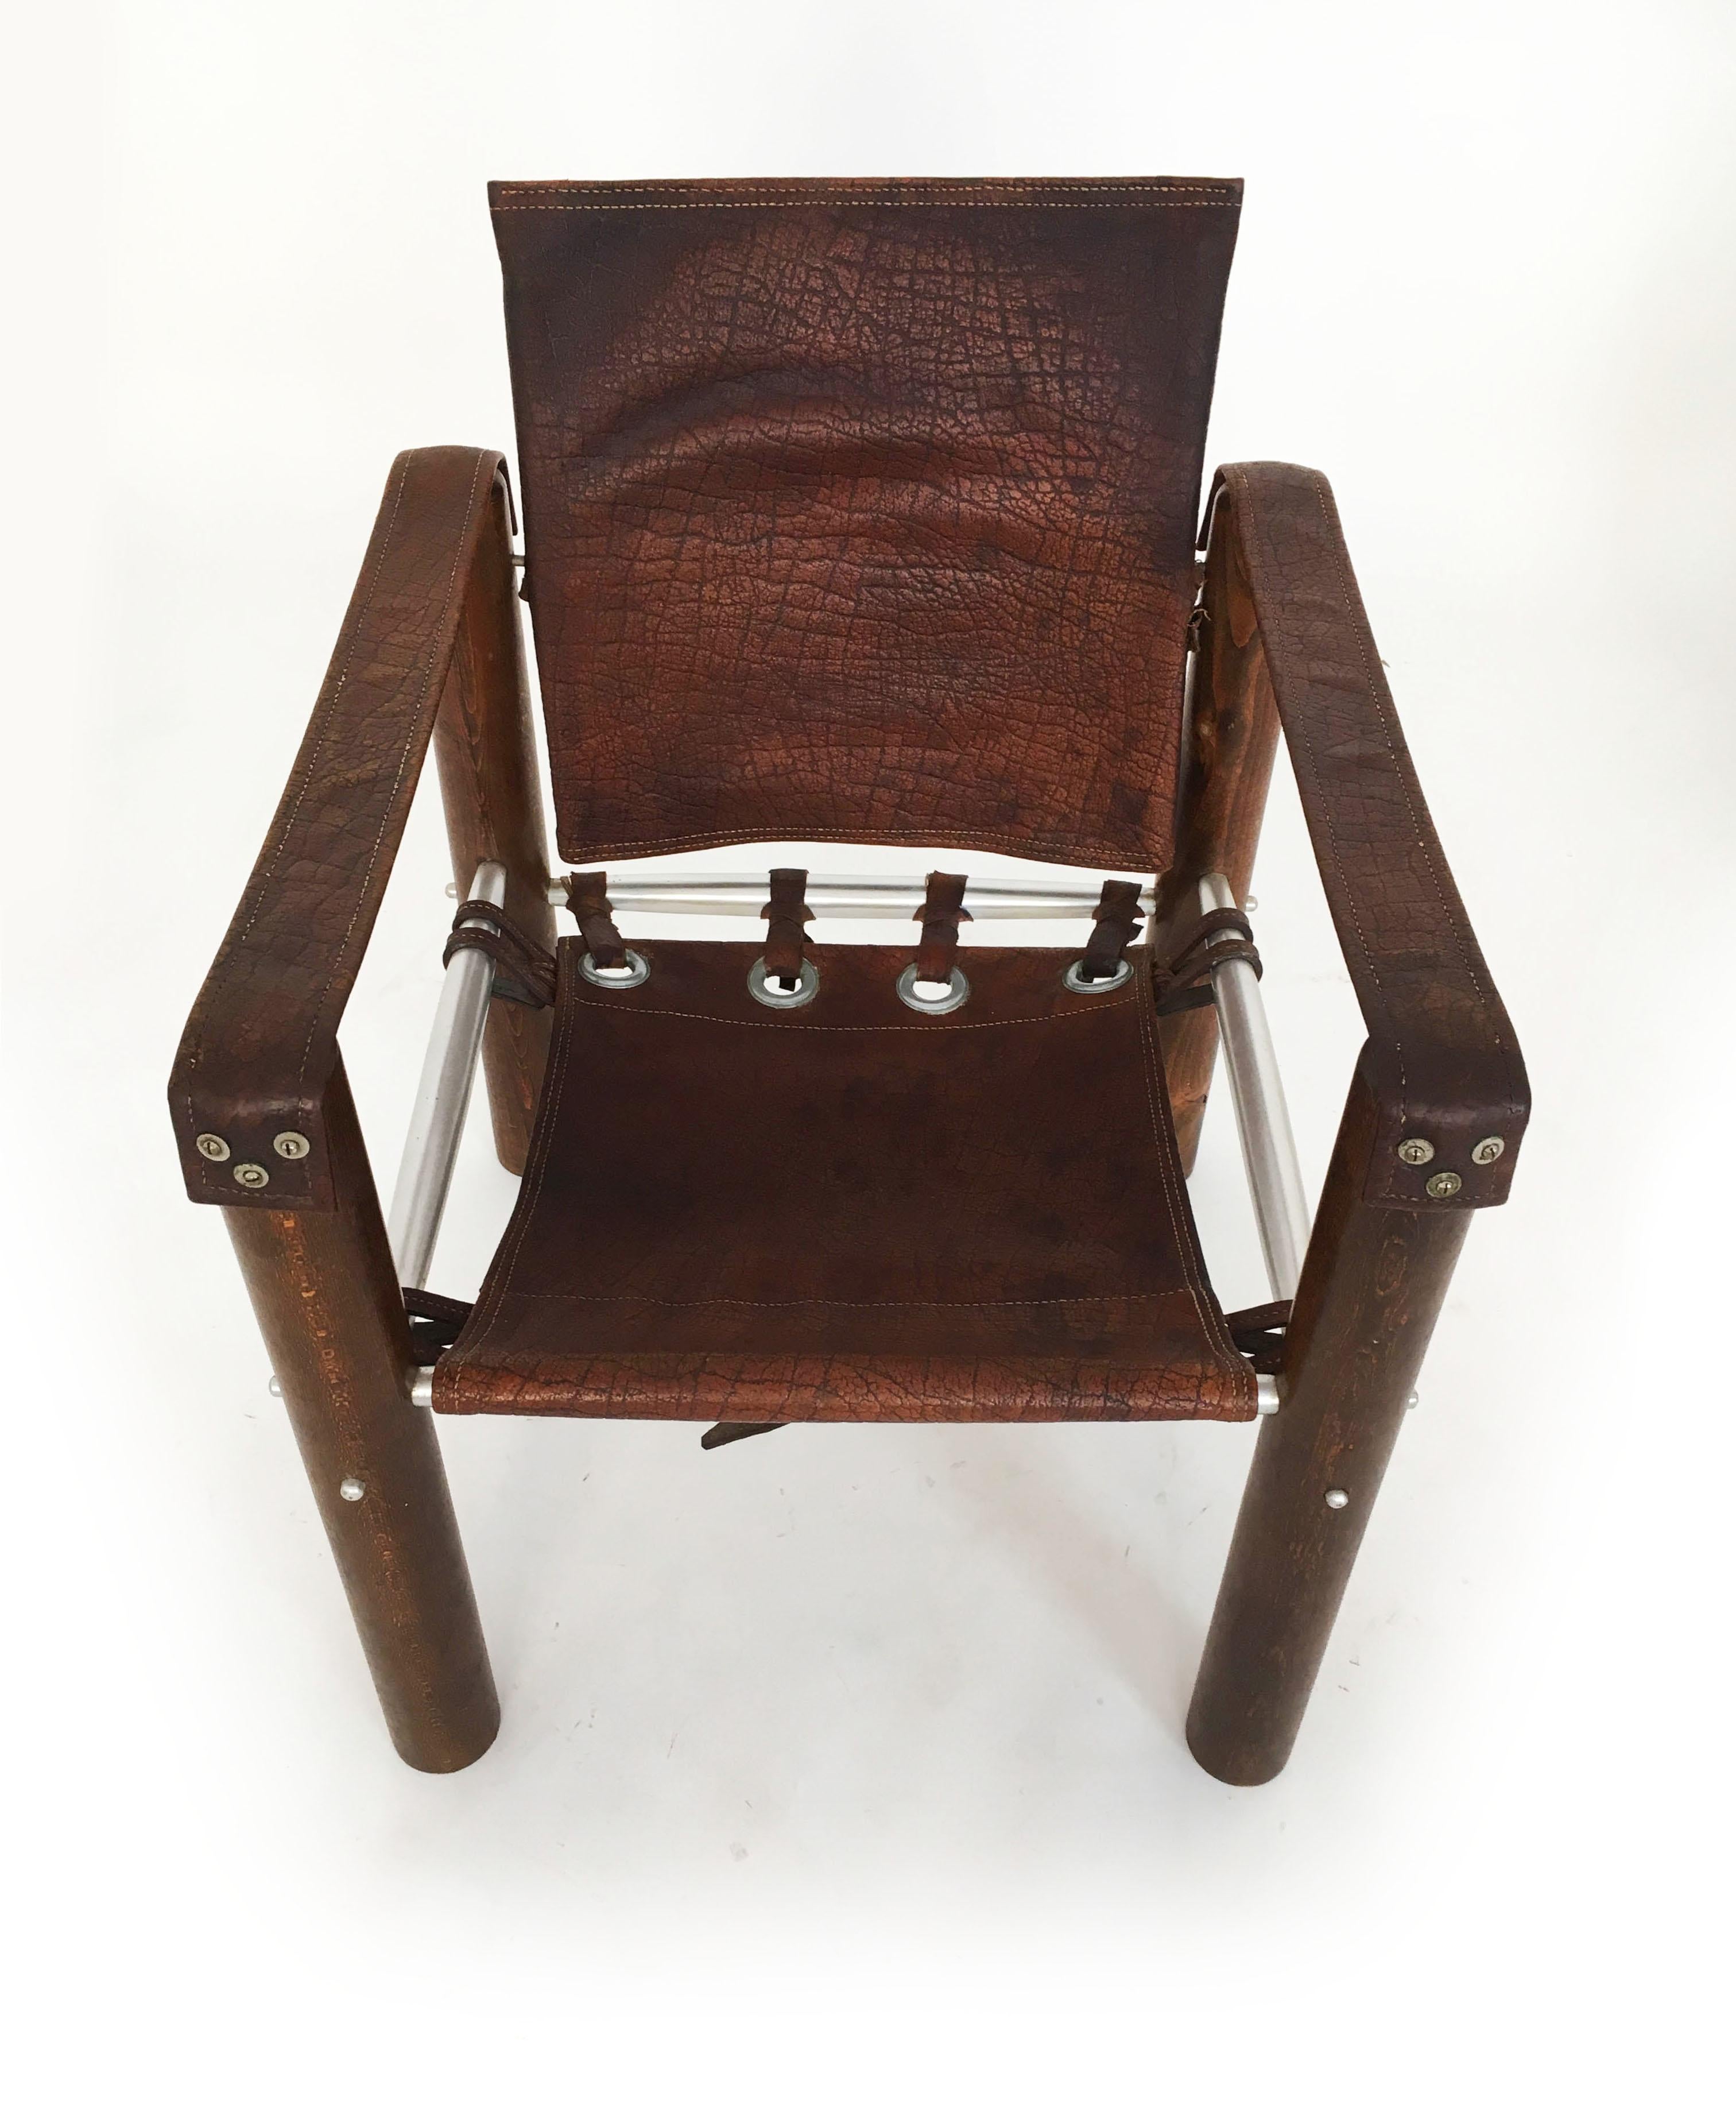 Brazilian Modern Safari Chairs Patinated Leather, Brazil 1970s For Sale